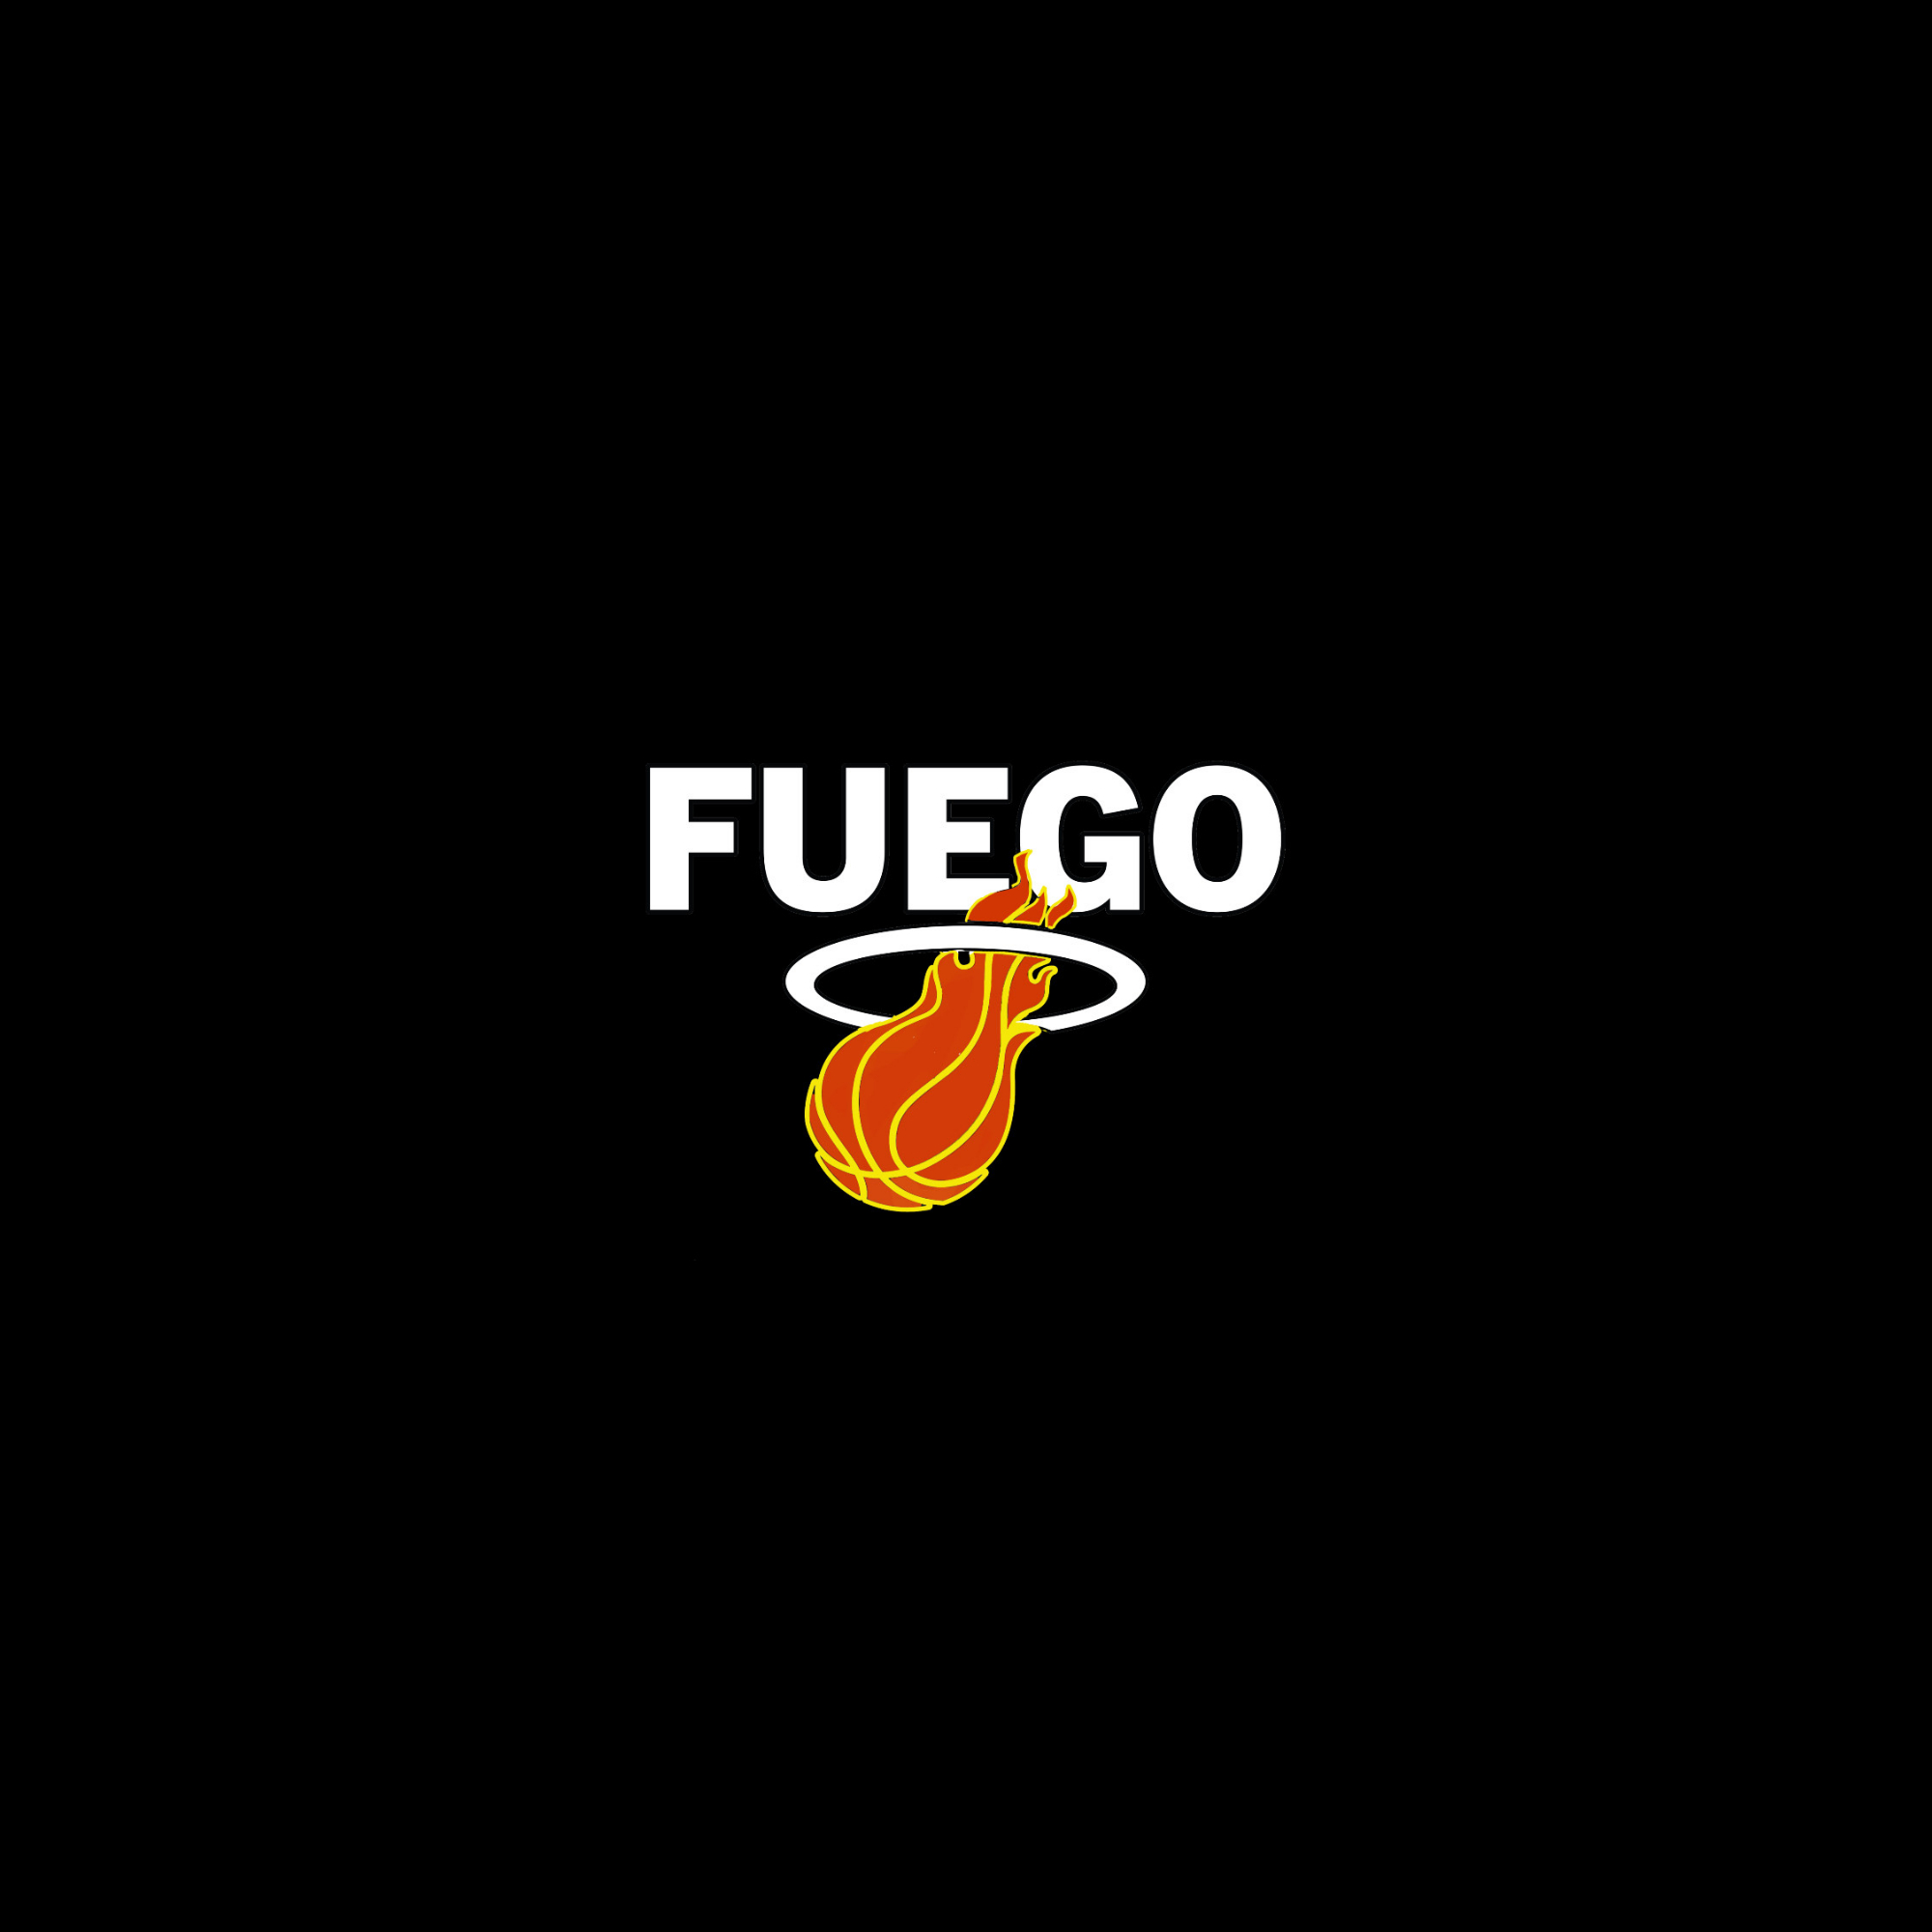 The official logo of 206 Fuego